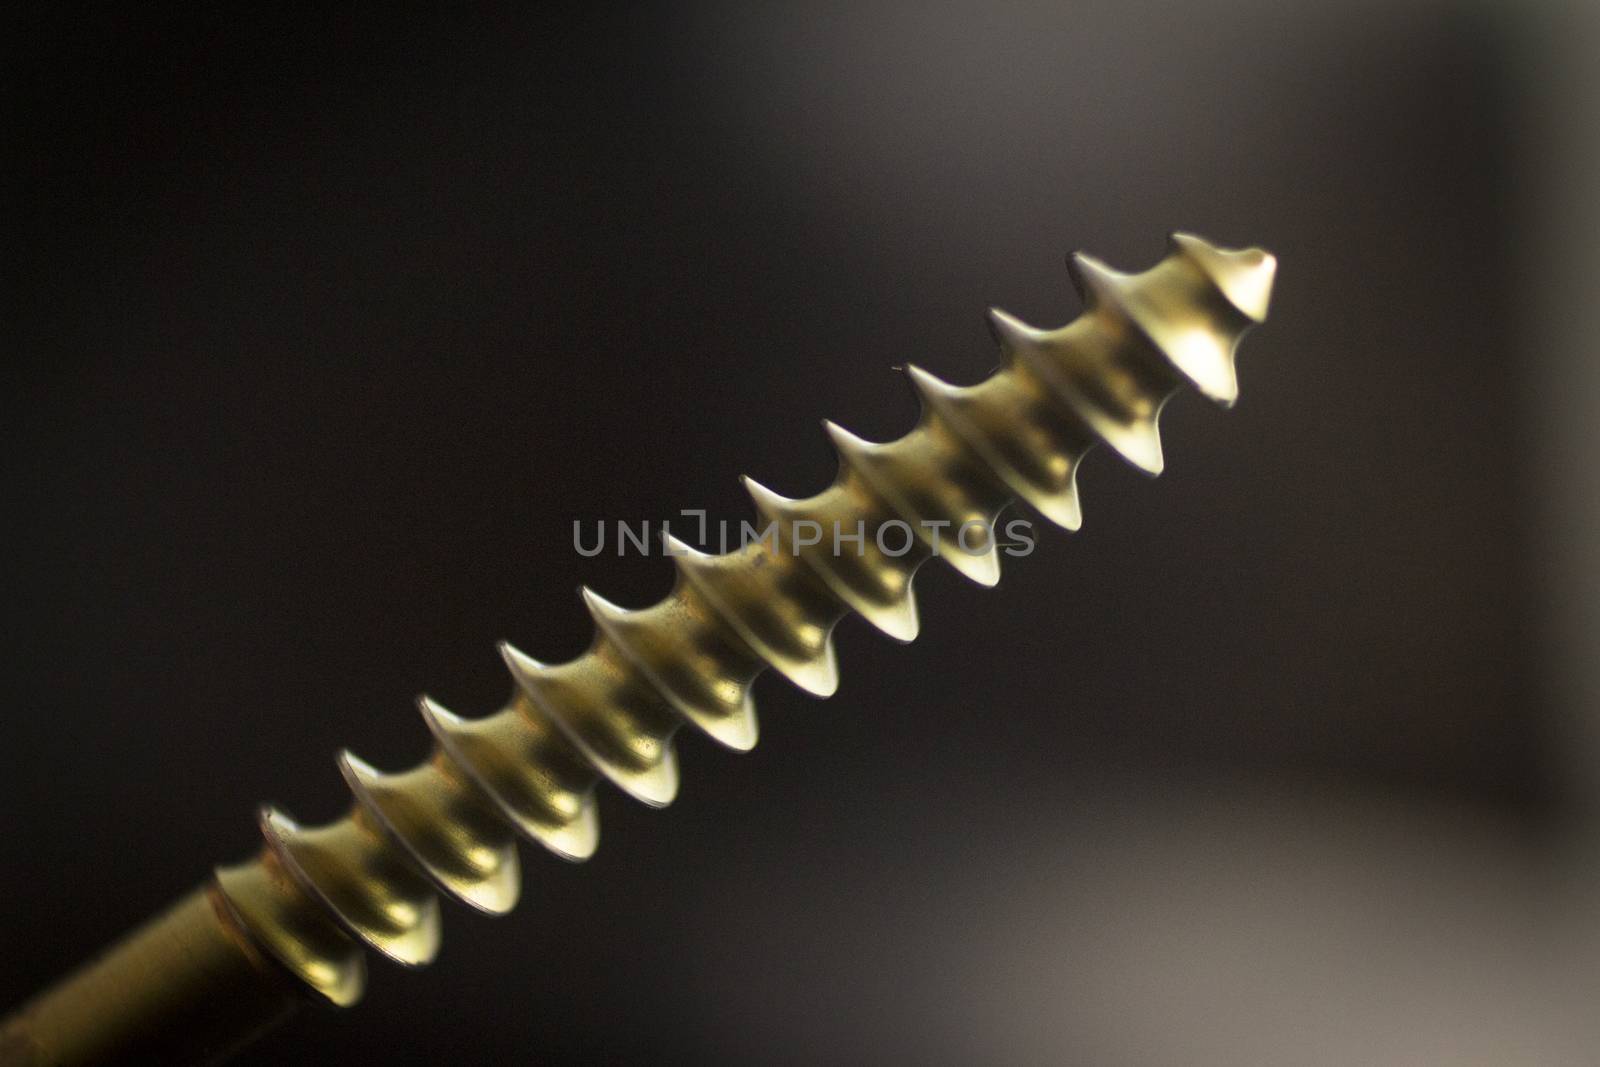 Traumatology orthopedic surgery implant titanium golden color screw in semi silhouette against plain black studio background. Close-up macro horizontal photograph. 